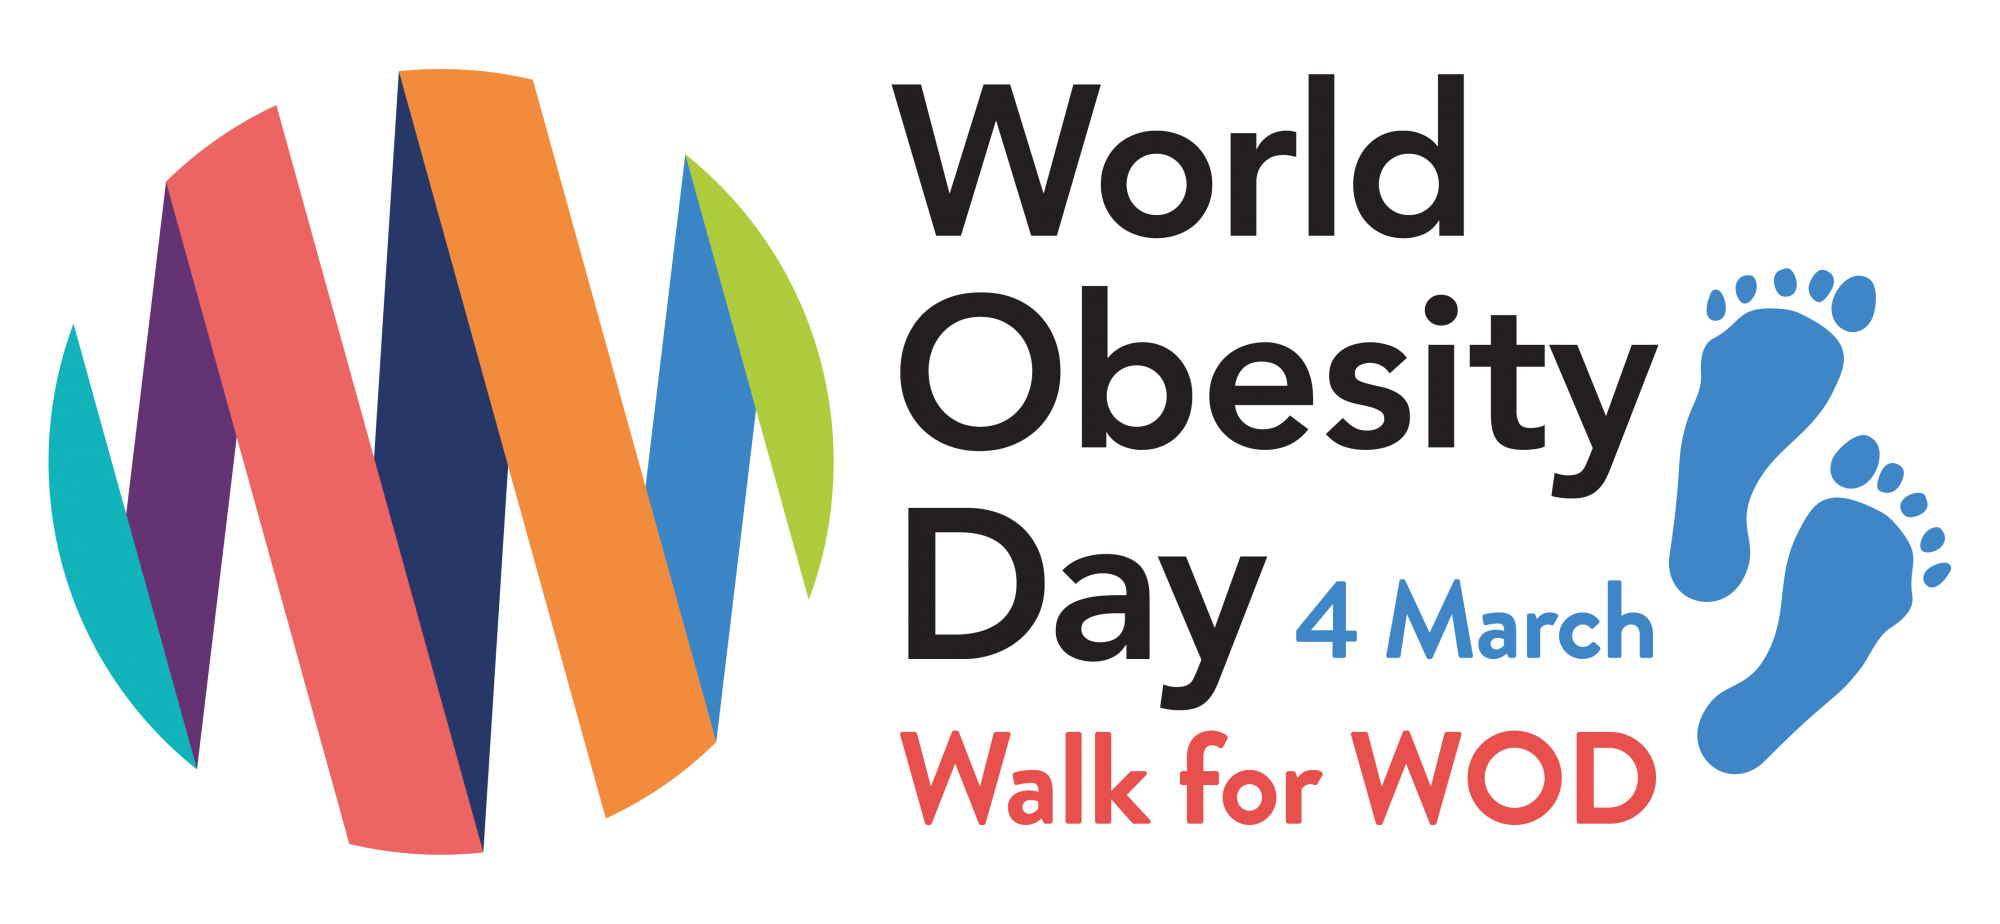 Walk for WOD logo